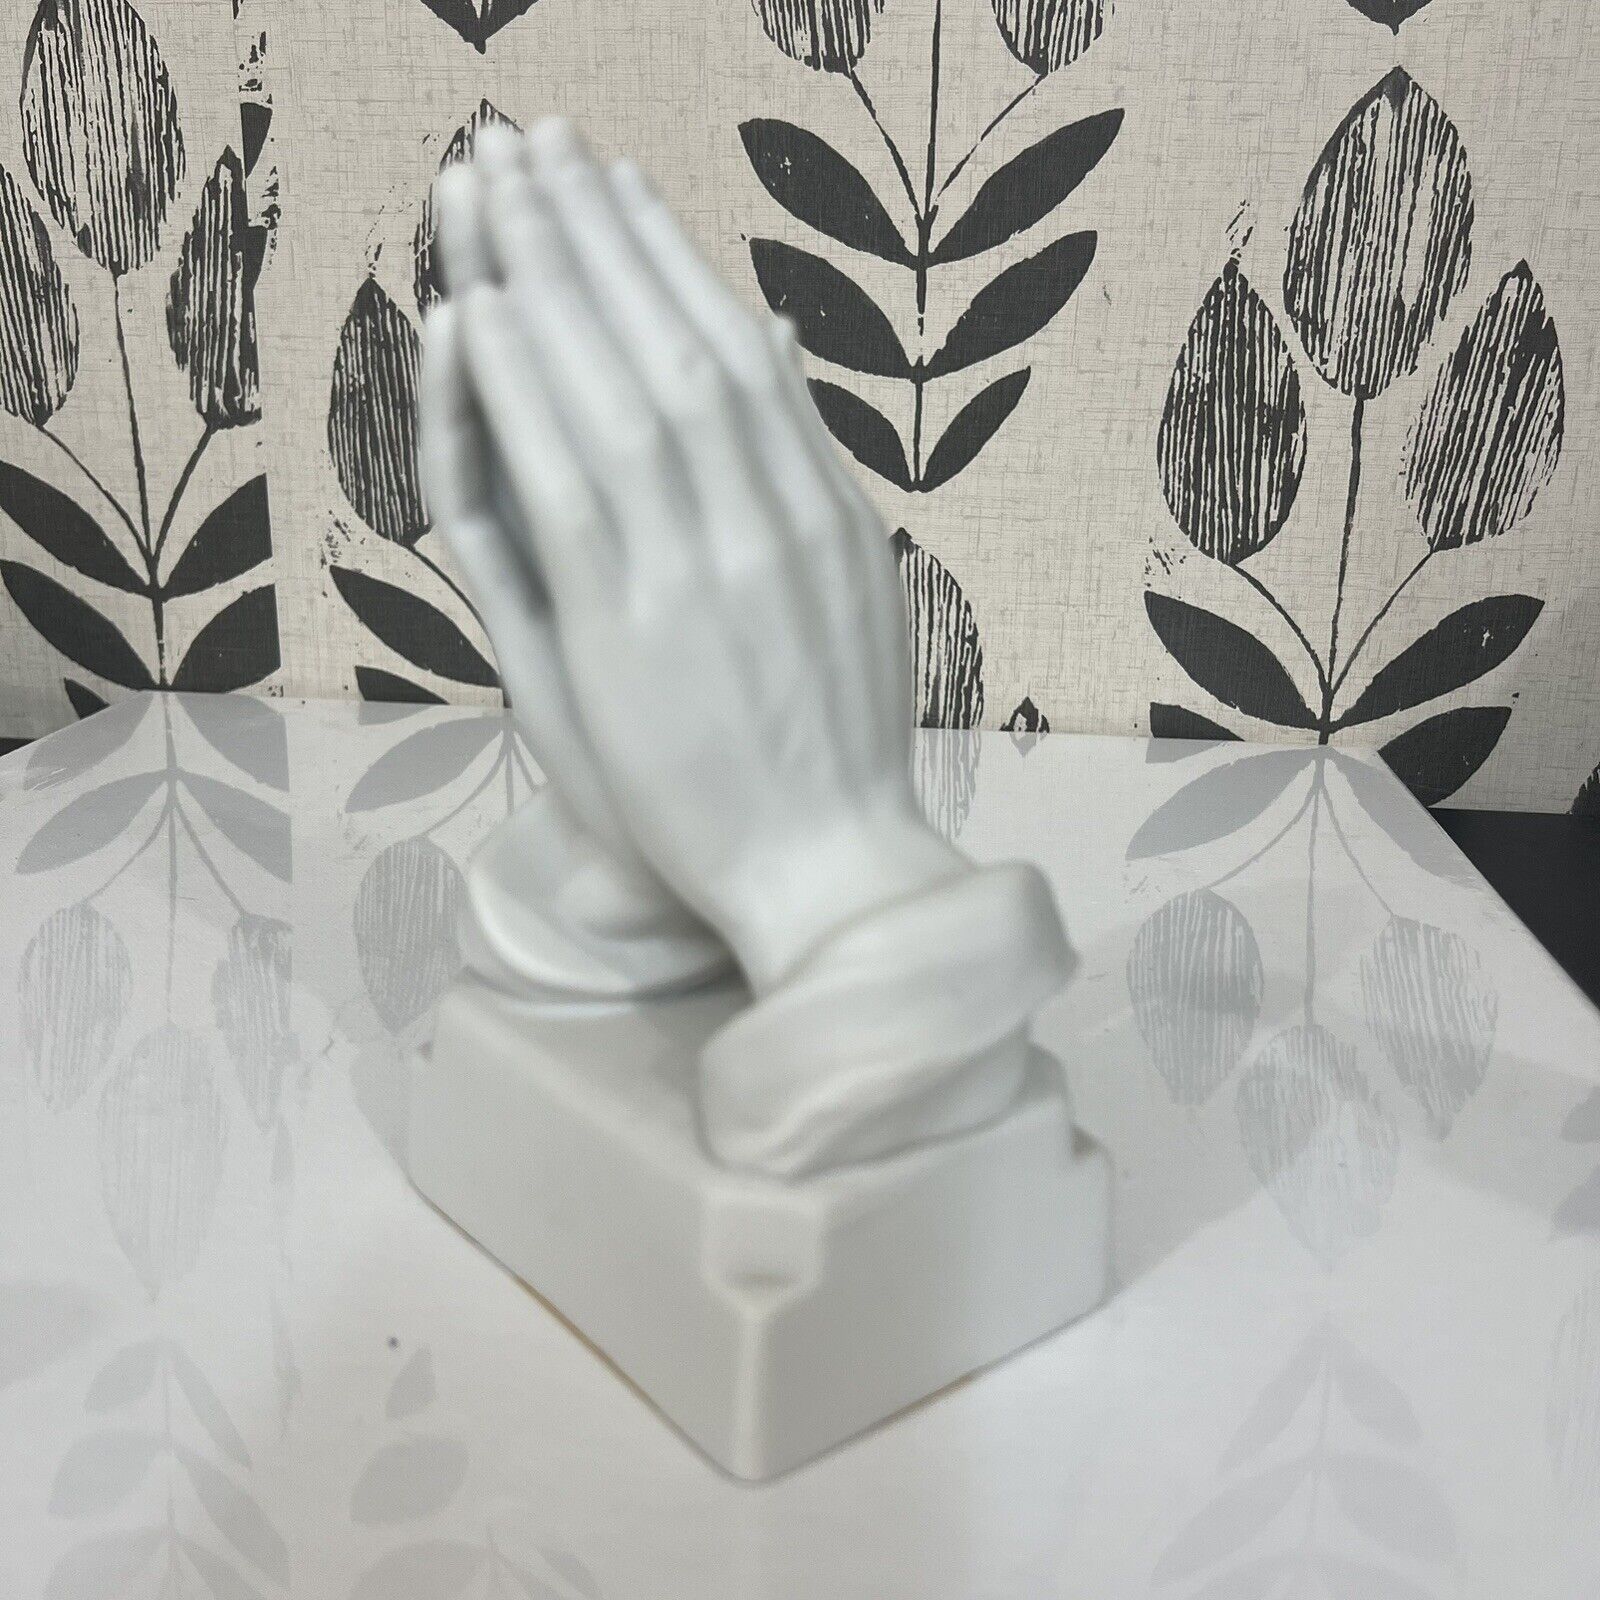 Vintage Praying Hands Lamp - Vintage Sculpture of Praying Hands